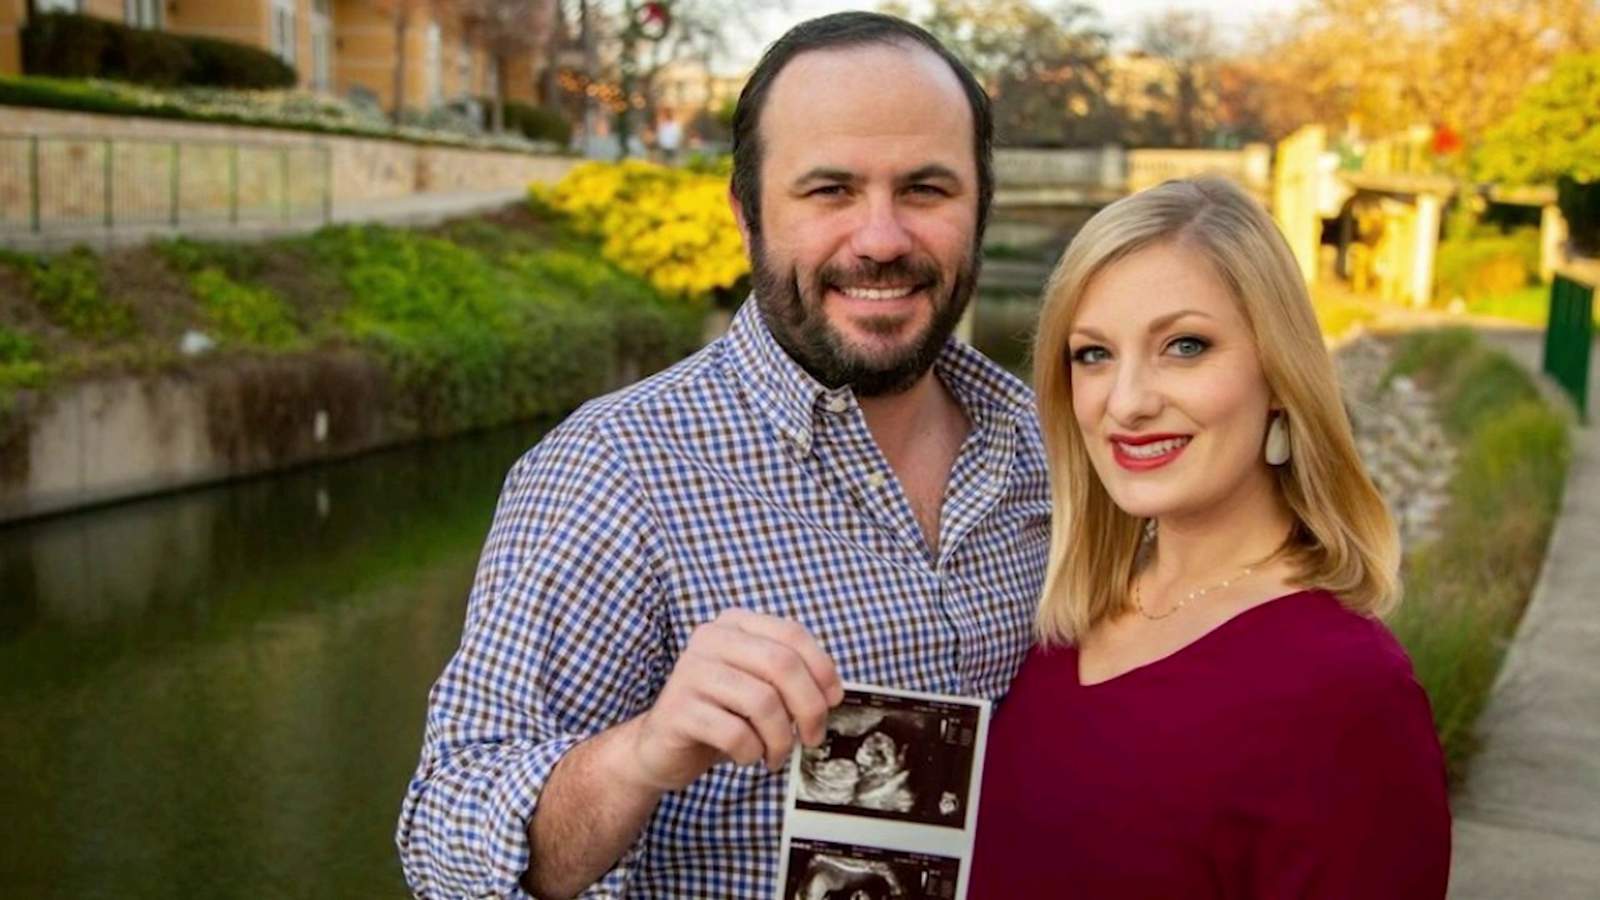 Pregnancy in a pandemic: KSAT anchor Courtney Friedman has a big announcement